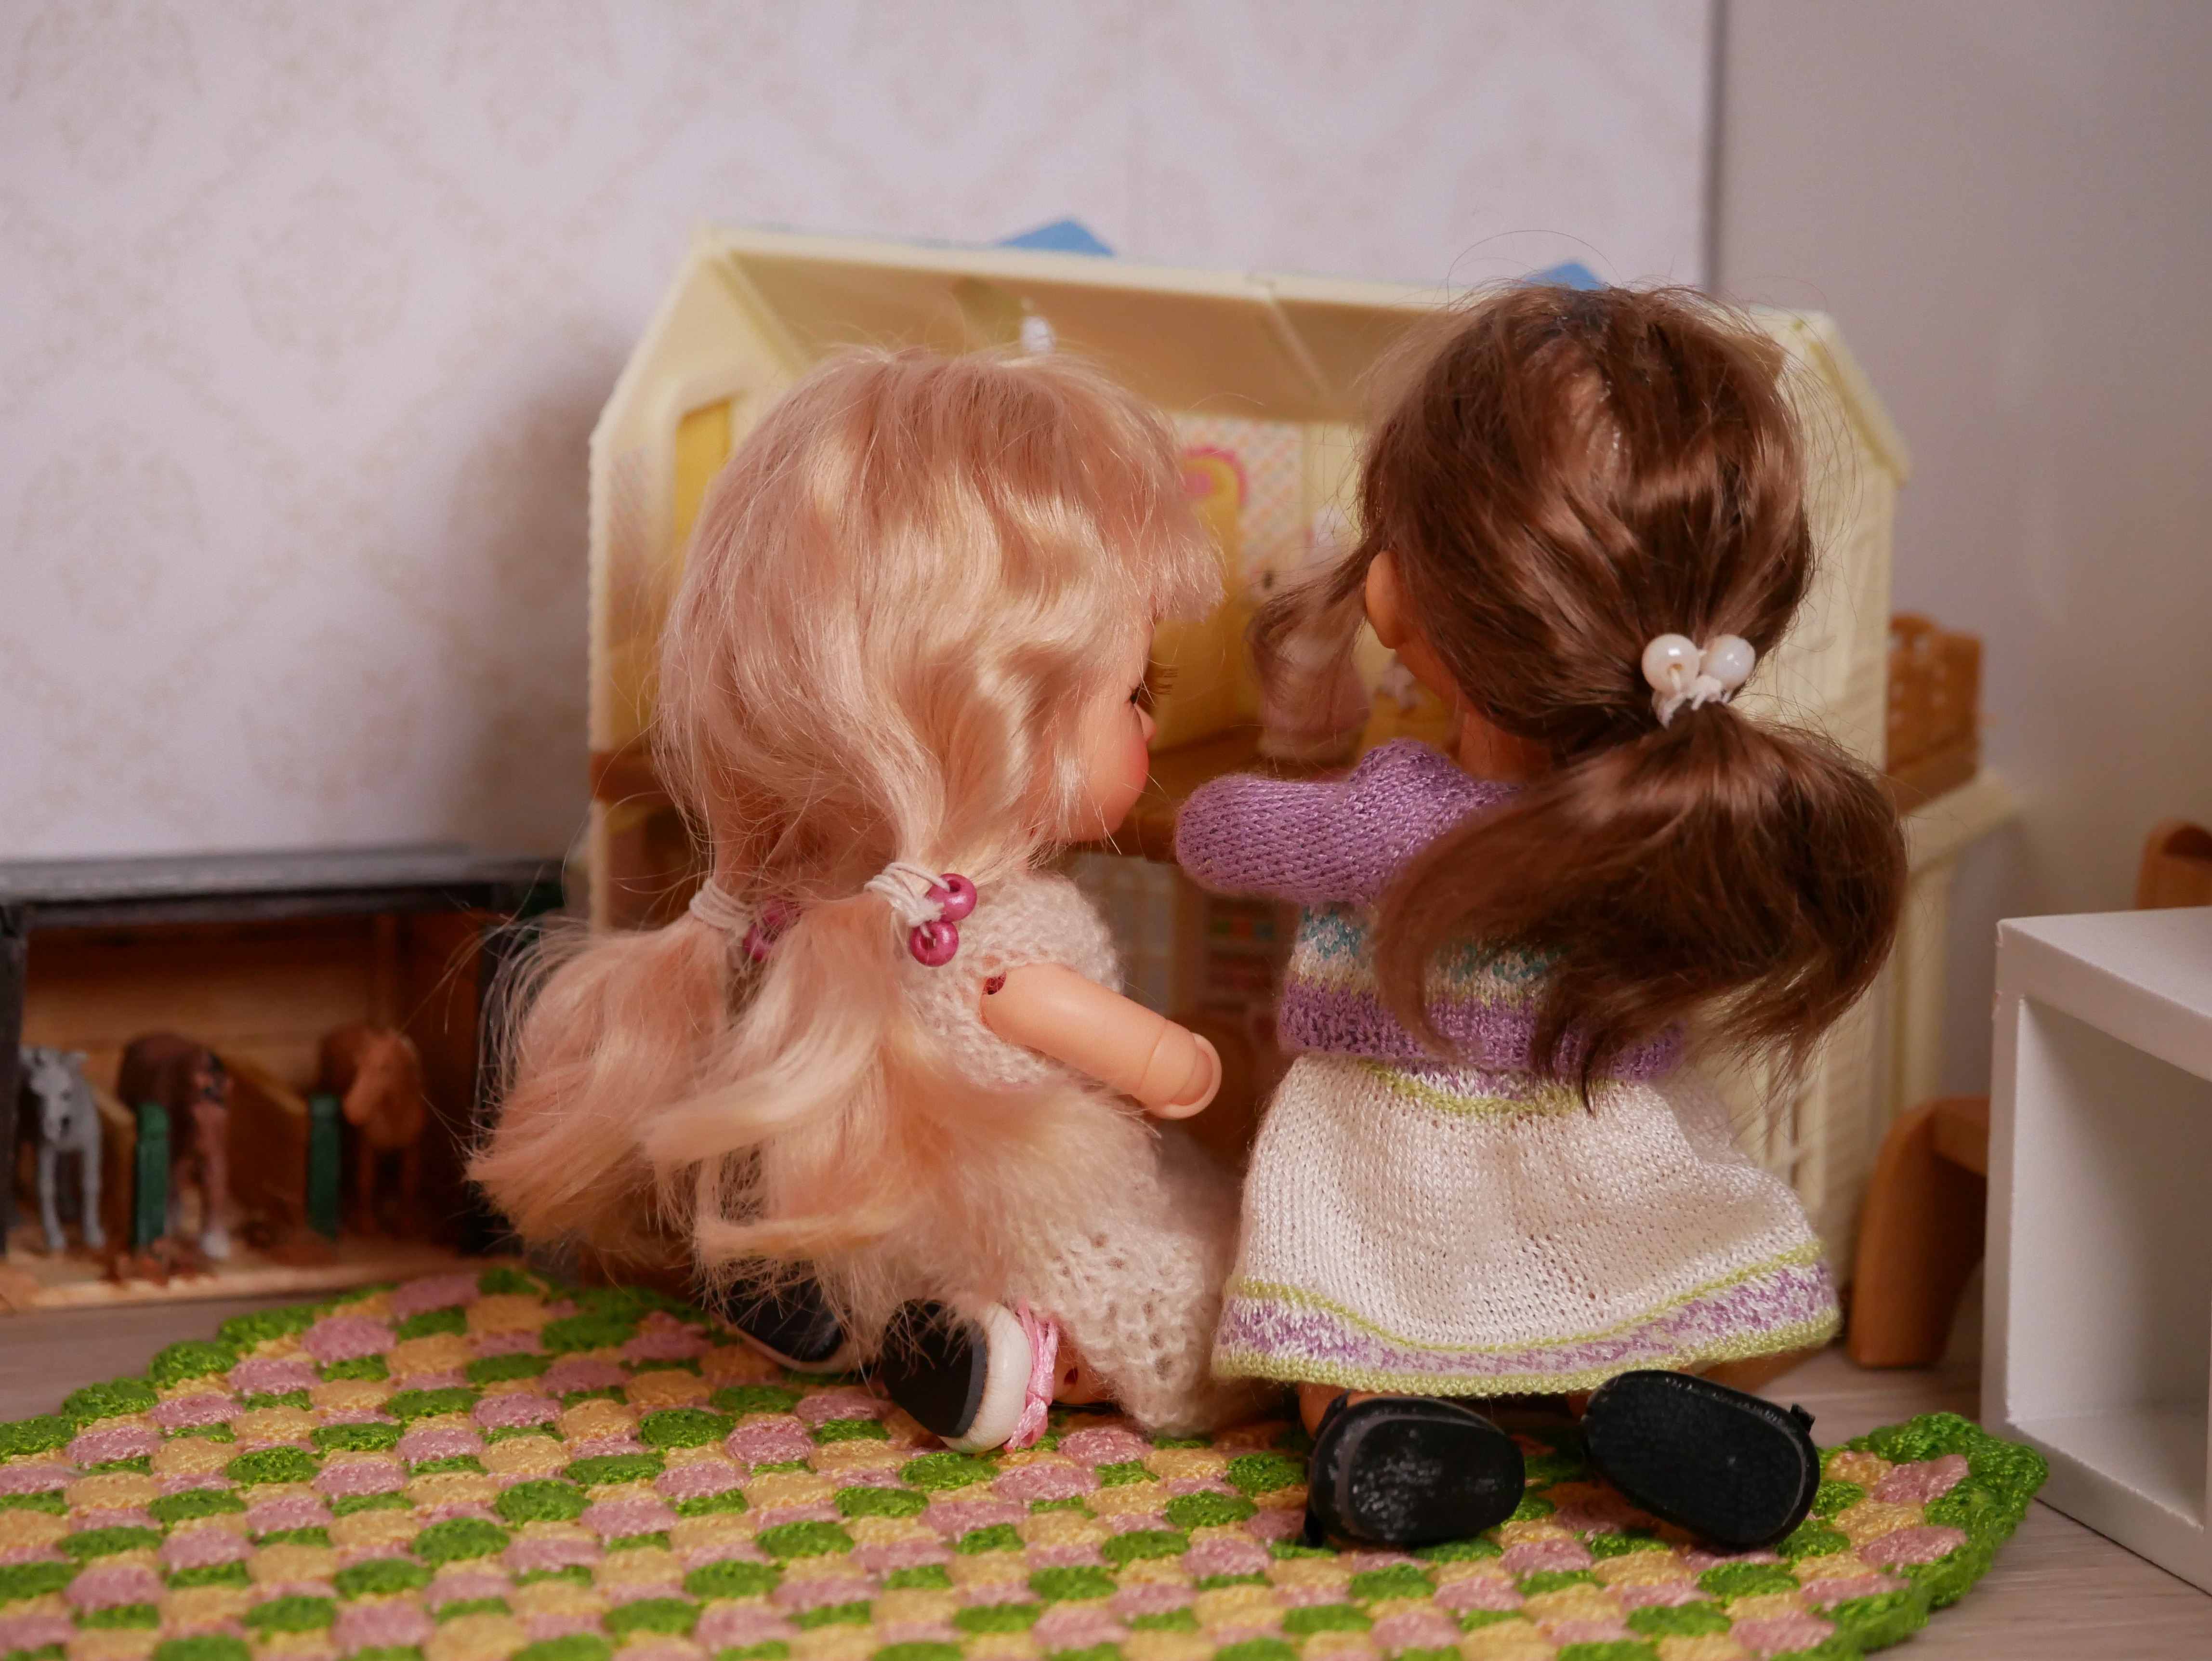 The girls love the dollhouse